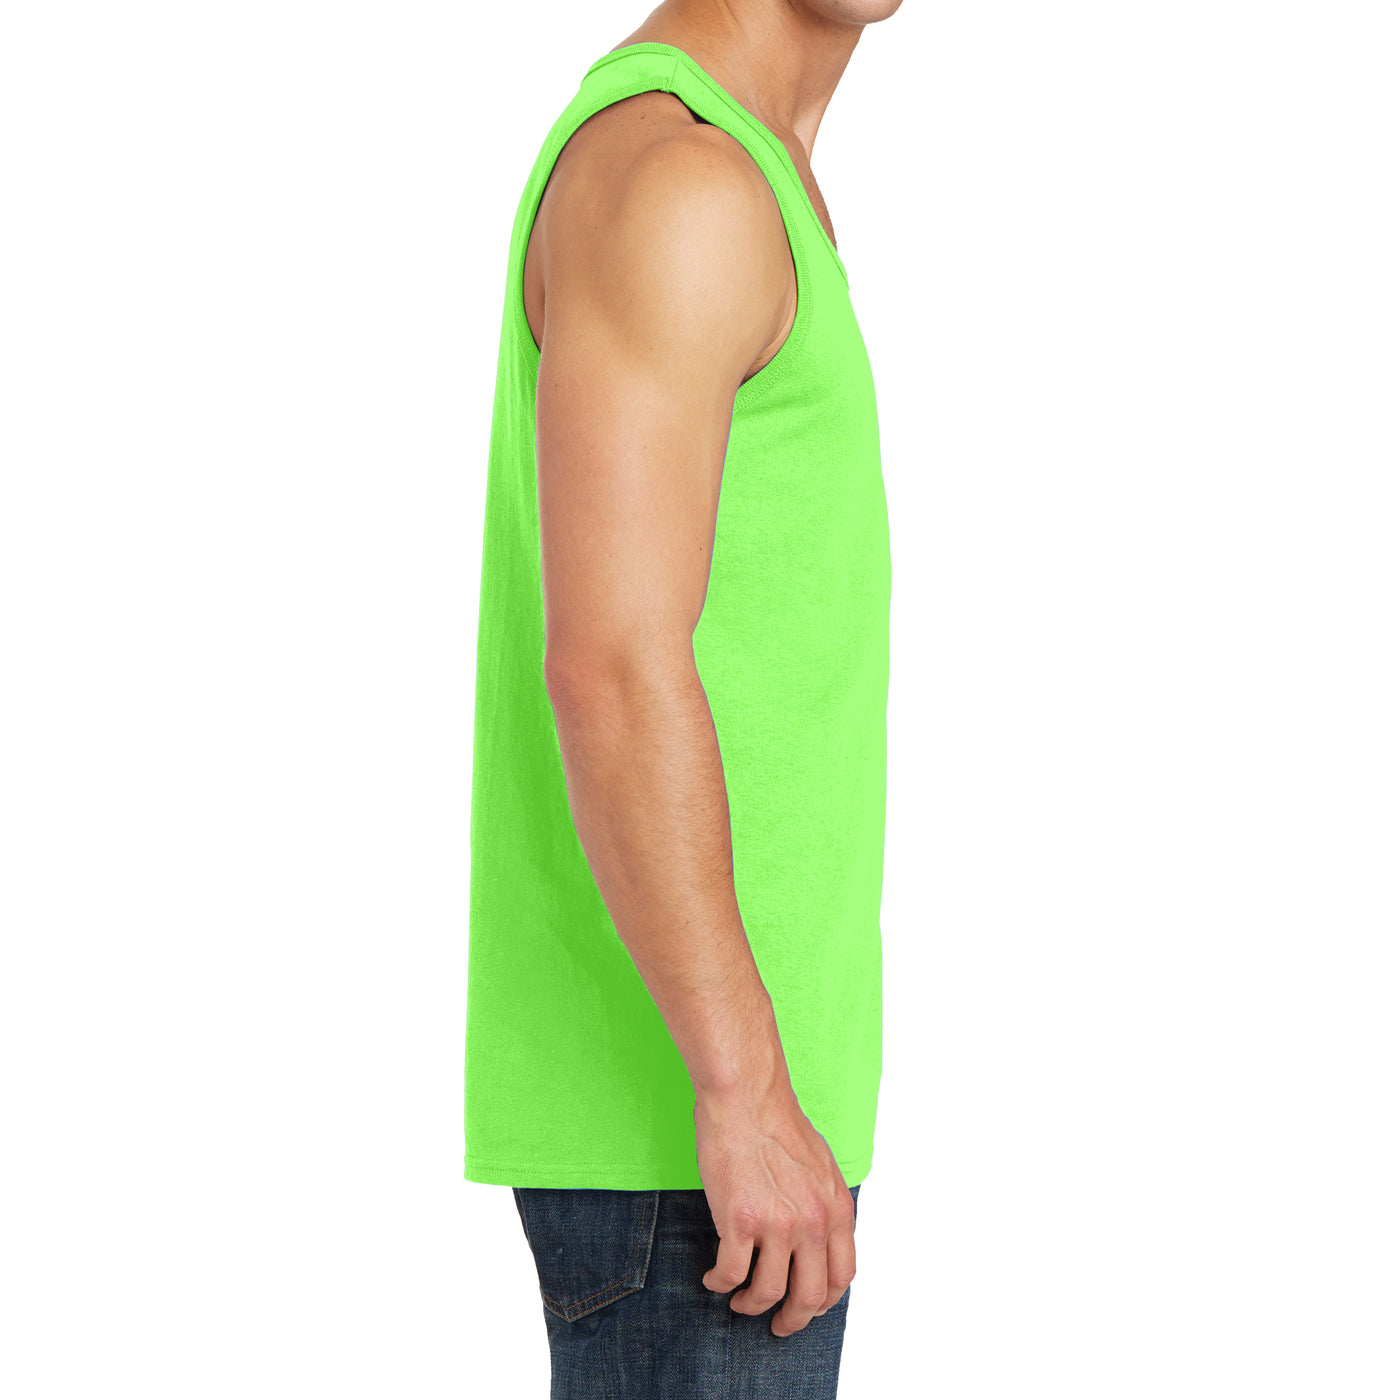 Men's Core Cotton Tank Top - Neon Green - Side